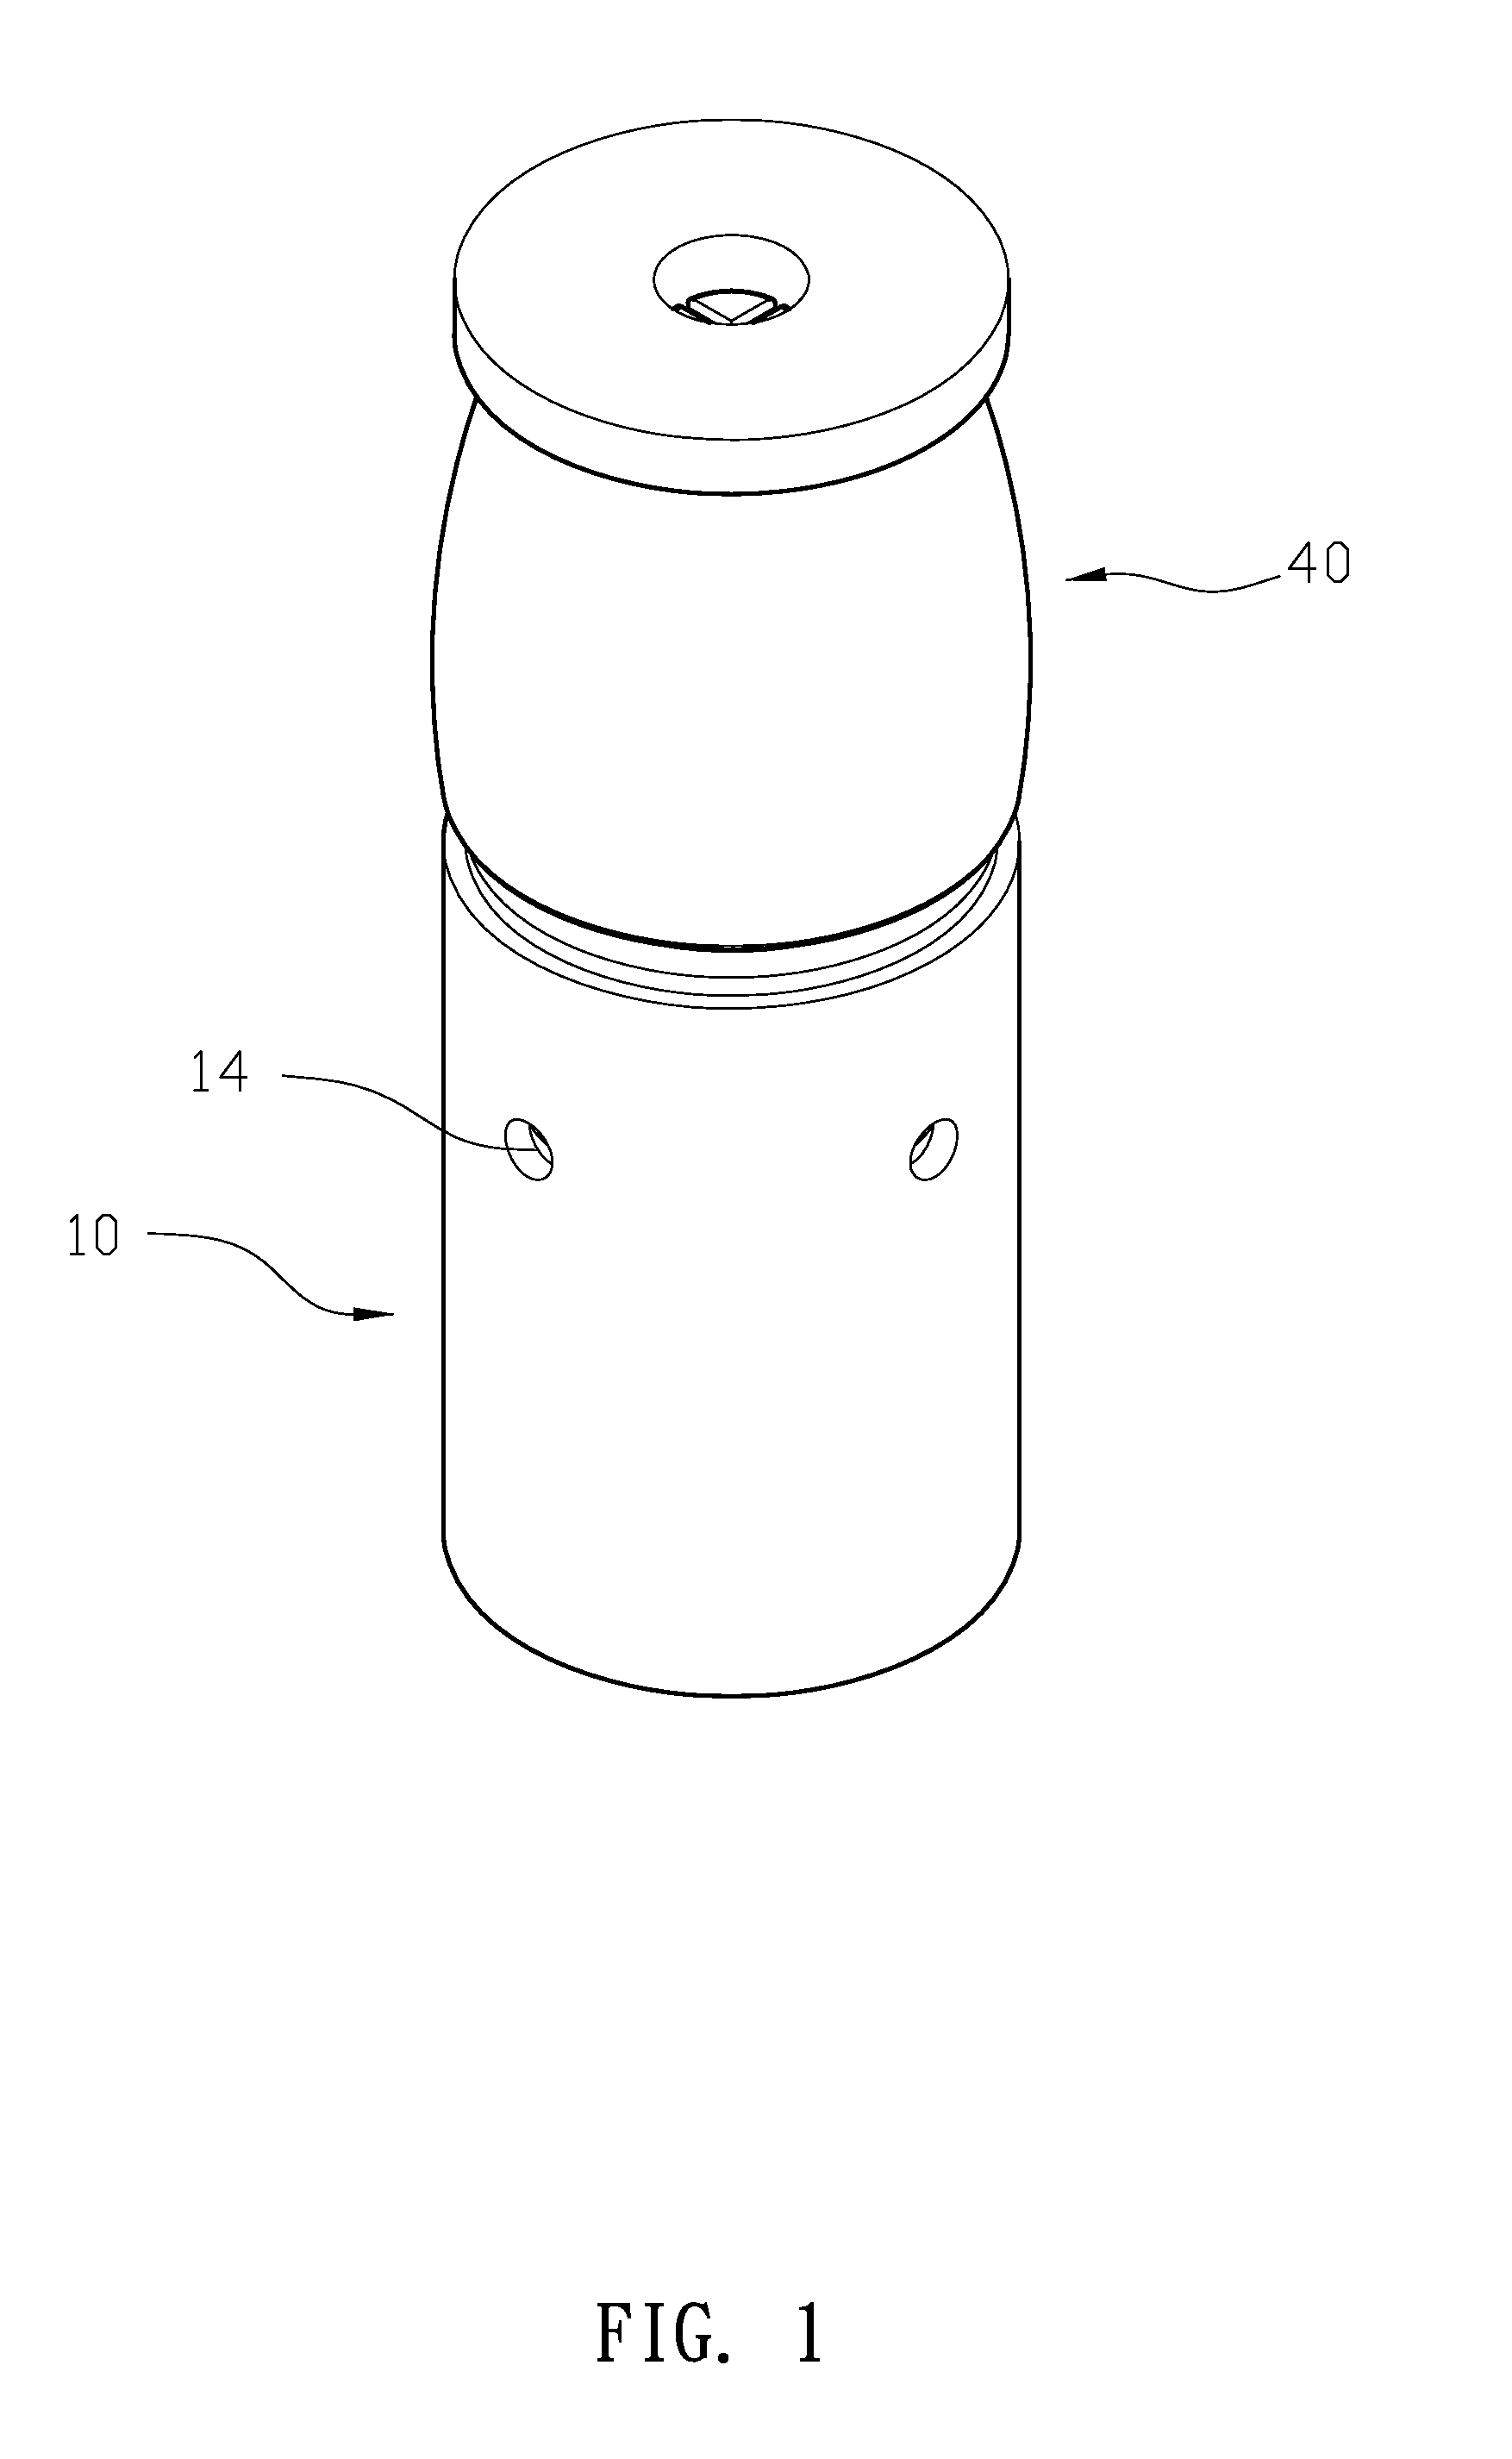 Self-shut valve for faucet